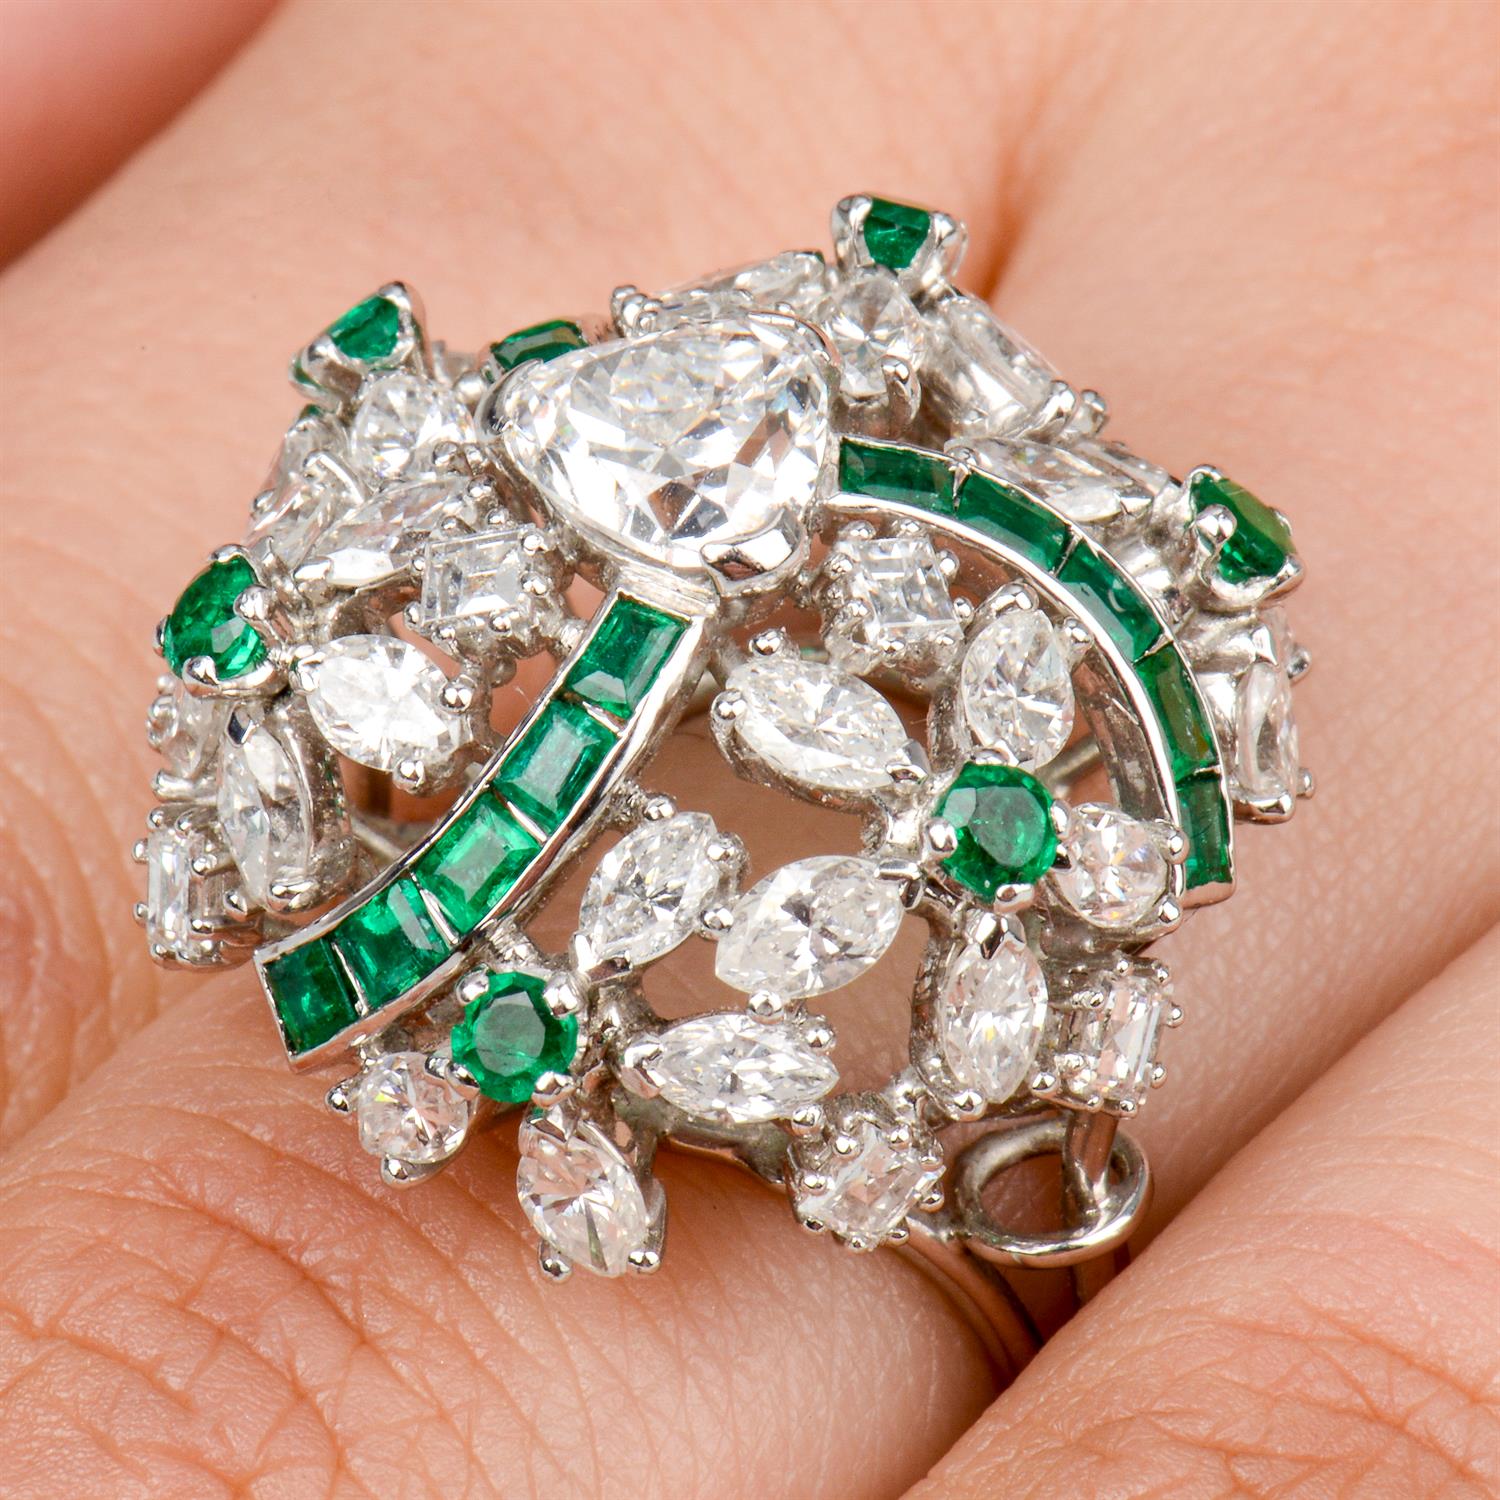 Mid 20th century platinum diamond and emerald floral ring